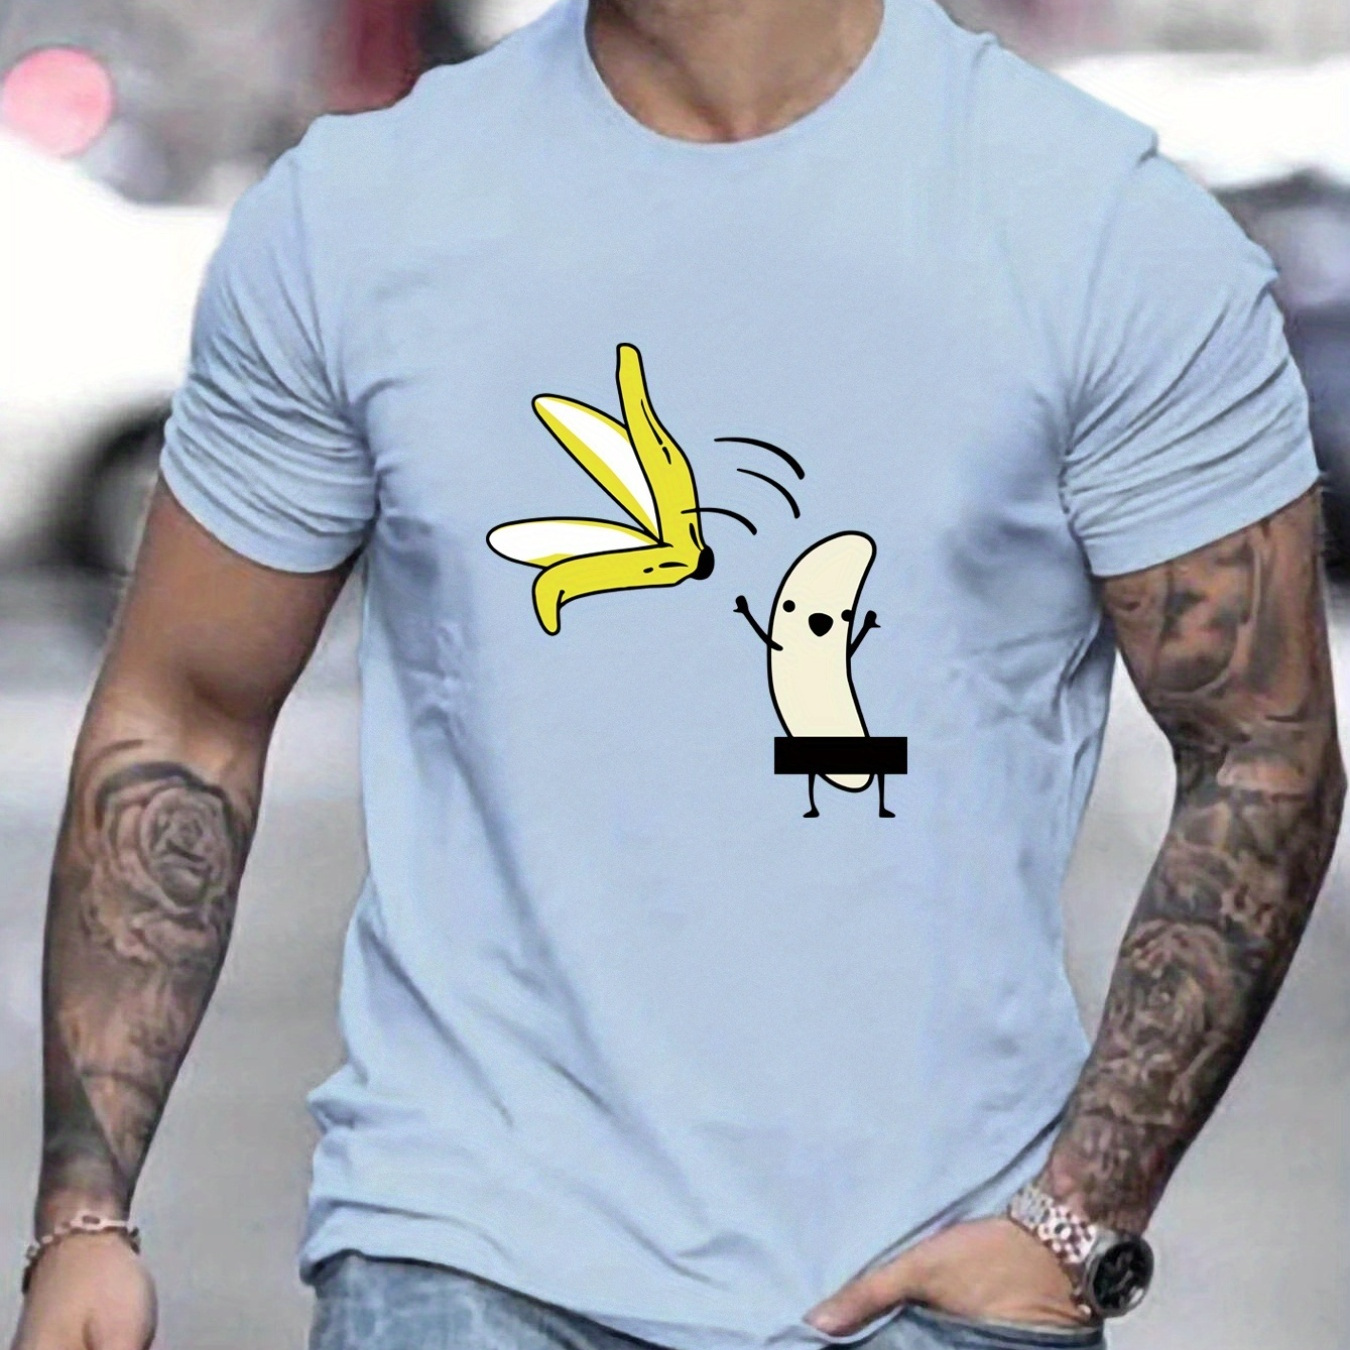 

Cartoon Banana Men's Causal Tee Tops Men's Crew Neck T-shirts Summer Clothes